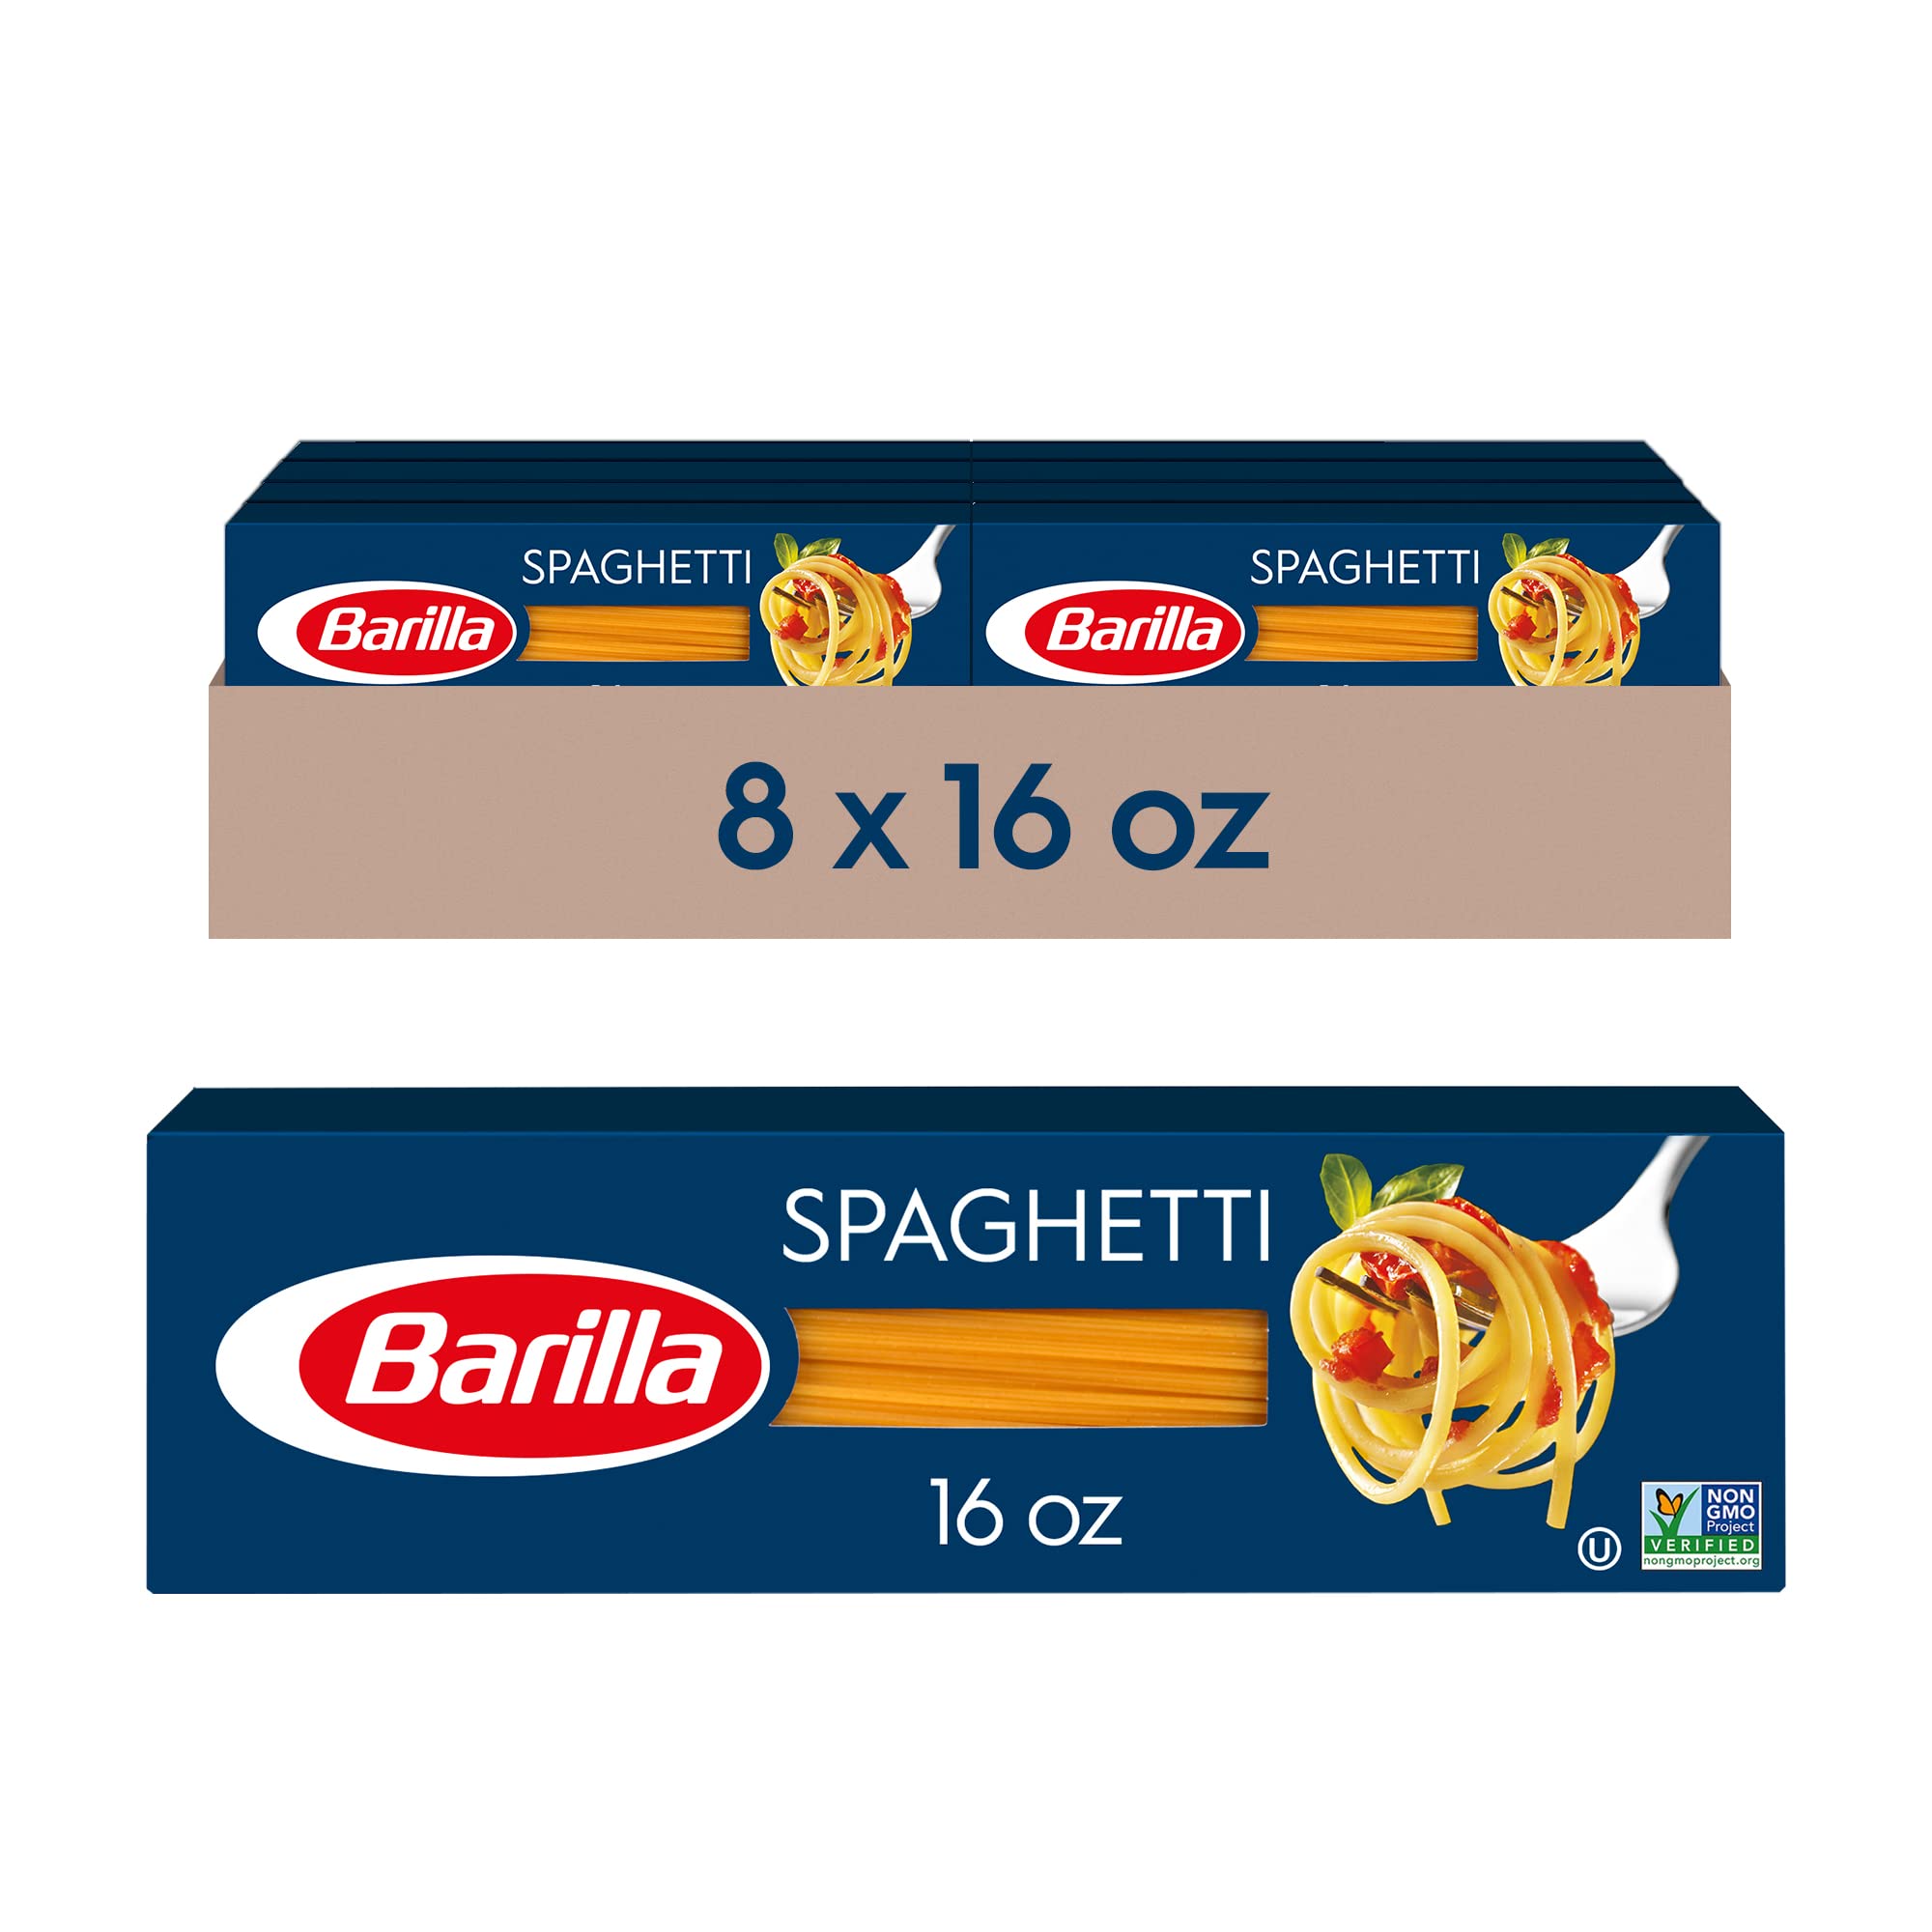 Barilla Spaghetti Pasta, 16 oz. Box (Pack of 8) - Non-GMO Pasta Made with  Durum Wheat Semolina - Italy's #1 Pasta Brand - Kosher Certified Pasta